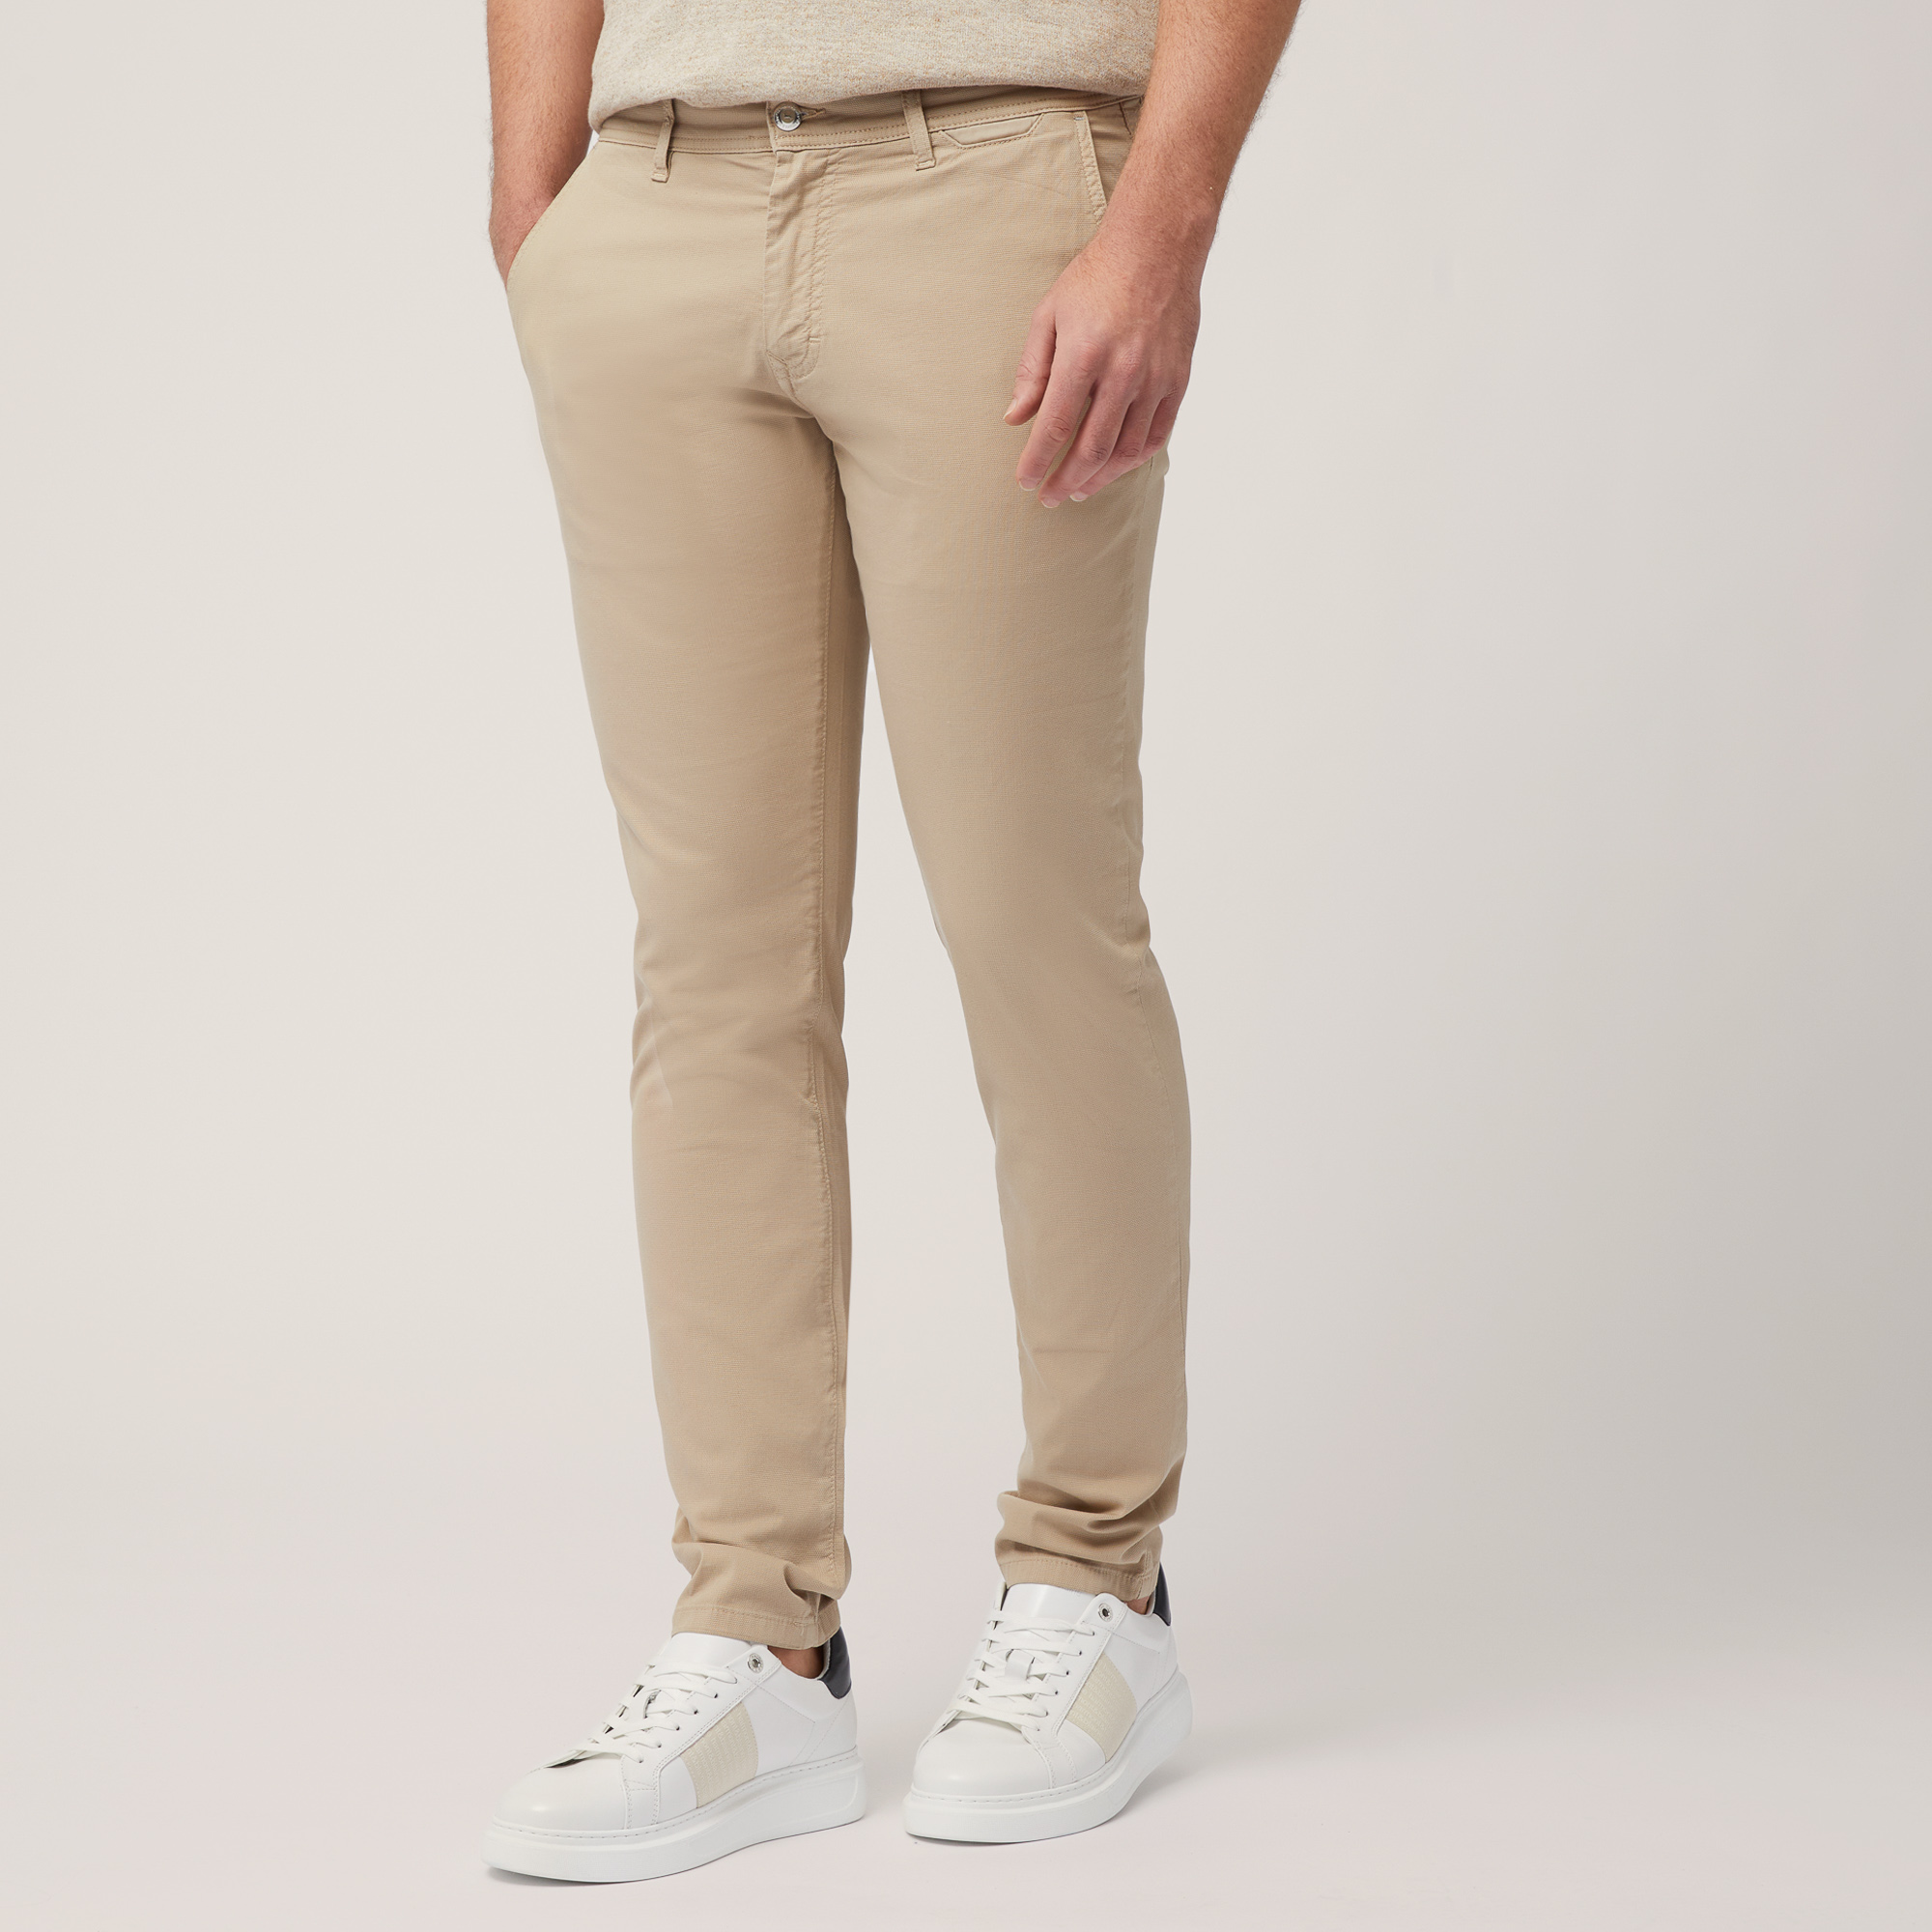 Pantaloni Colorfive, Beige, large